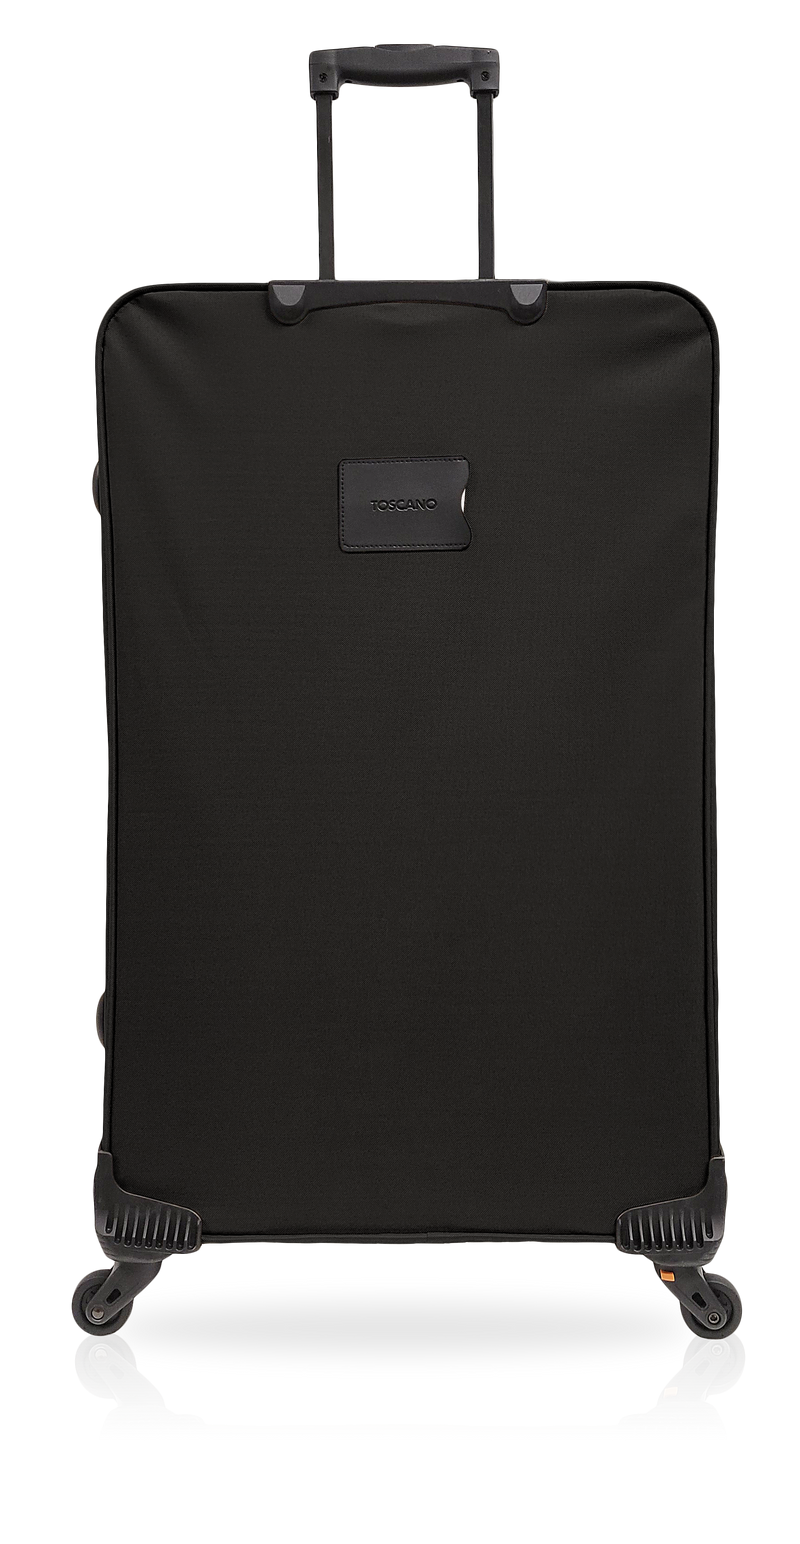 TOSCANO NOTEVOLE 21" Lightweight Travel Luggage